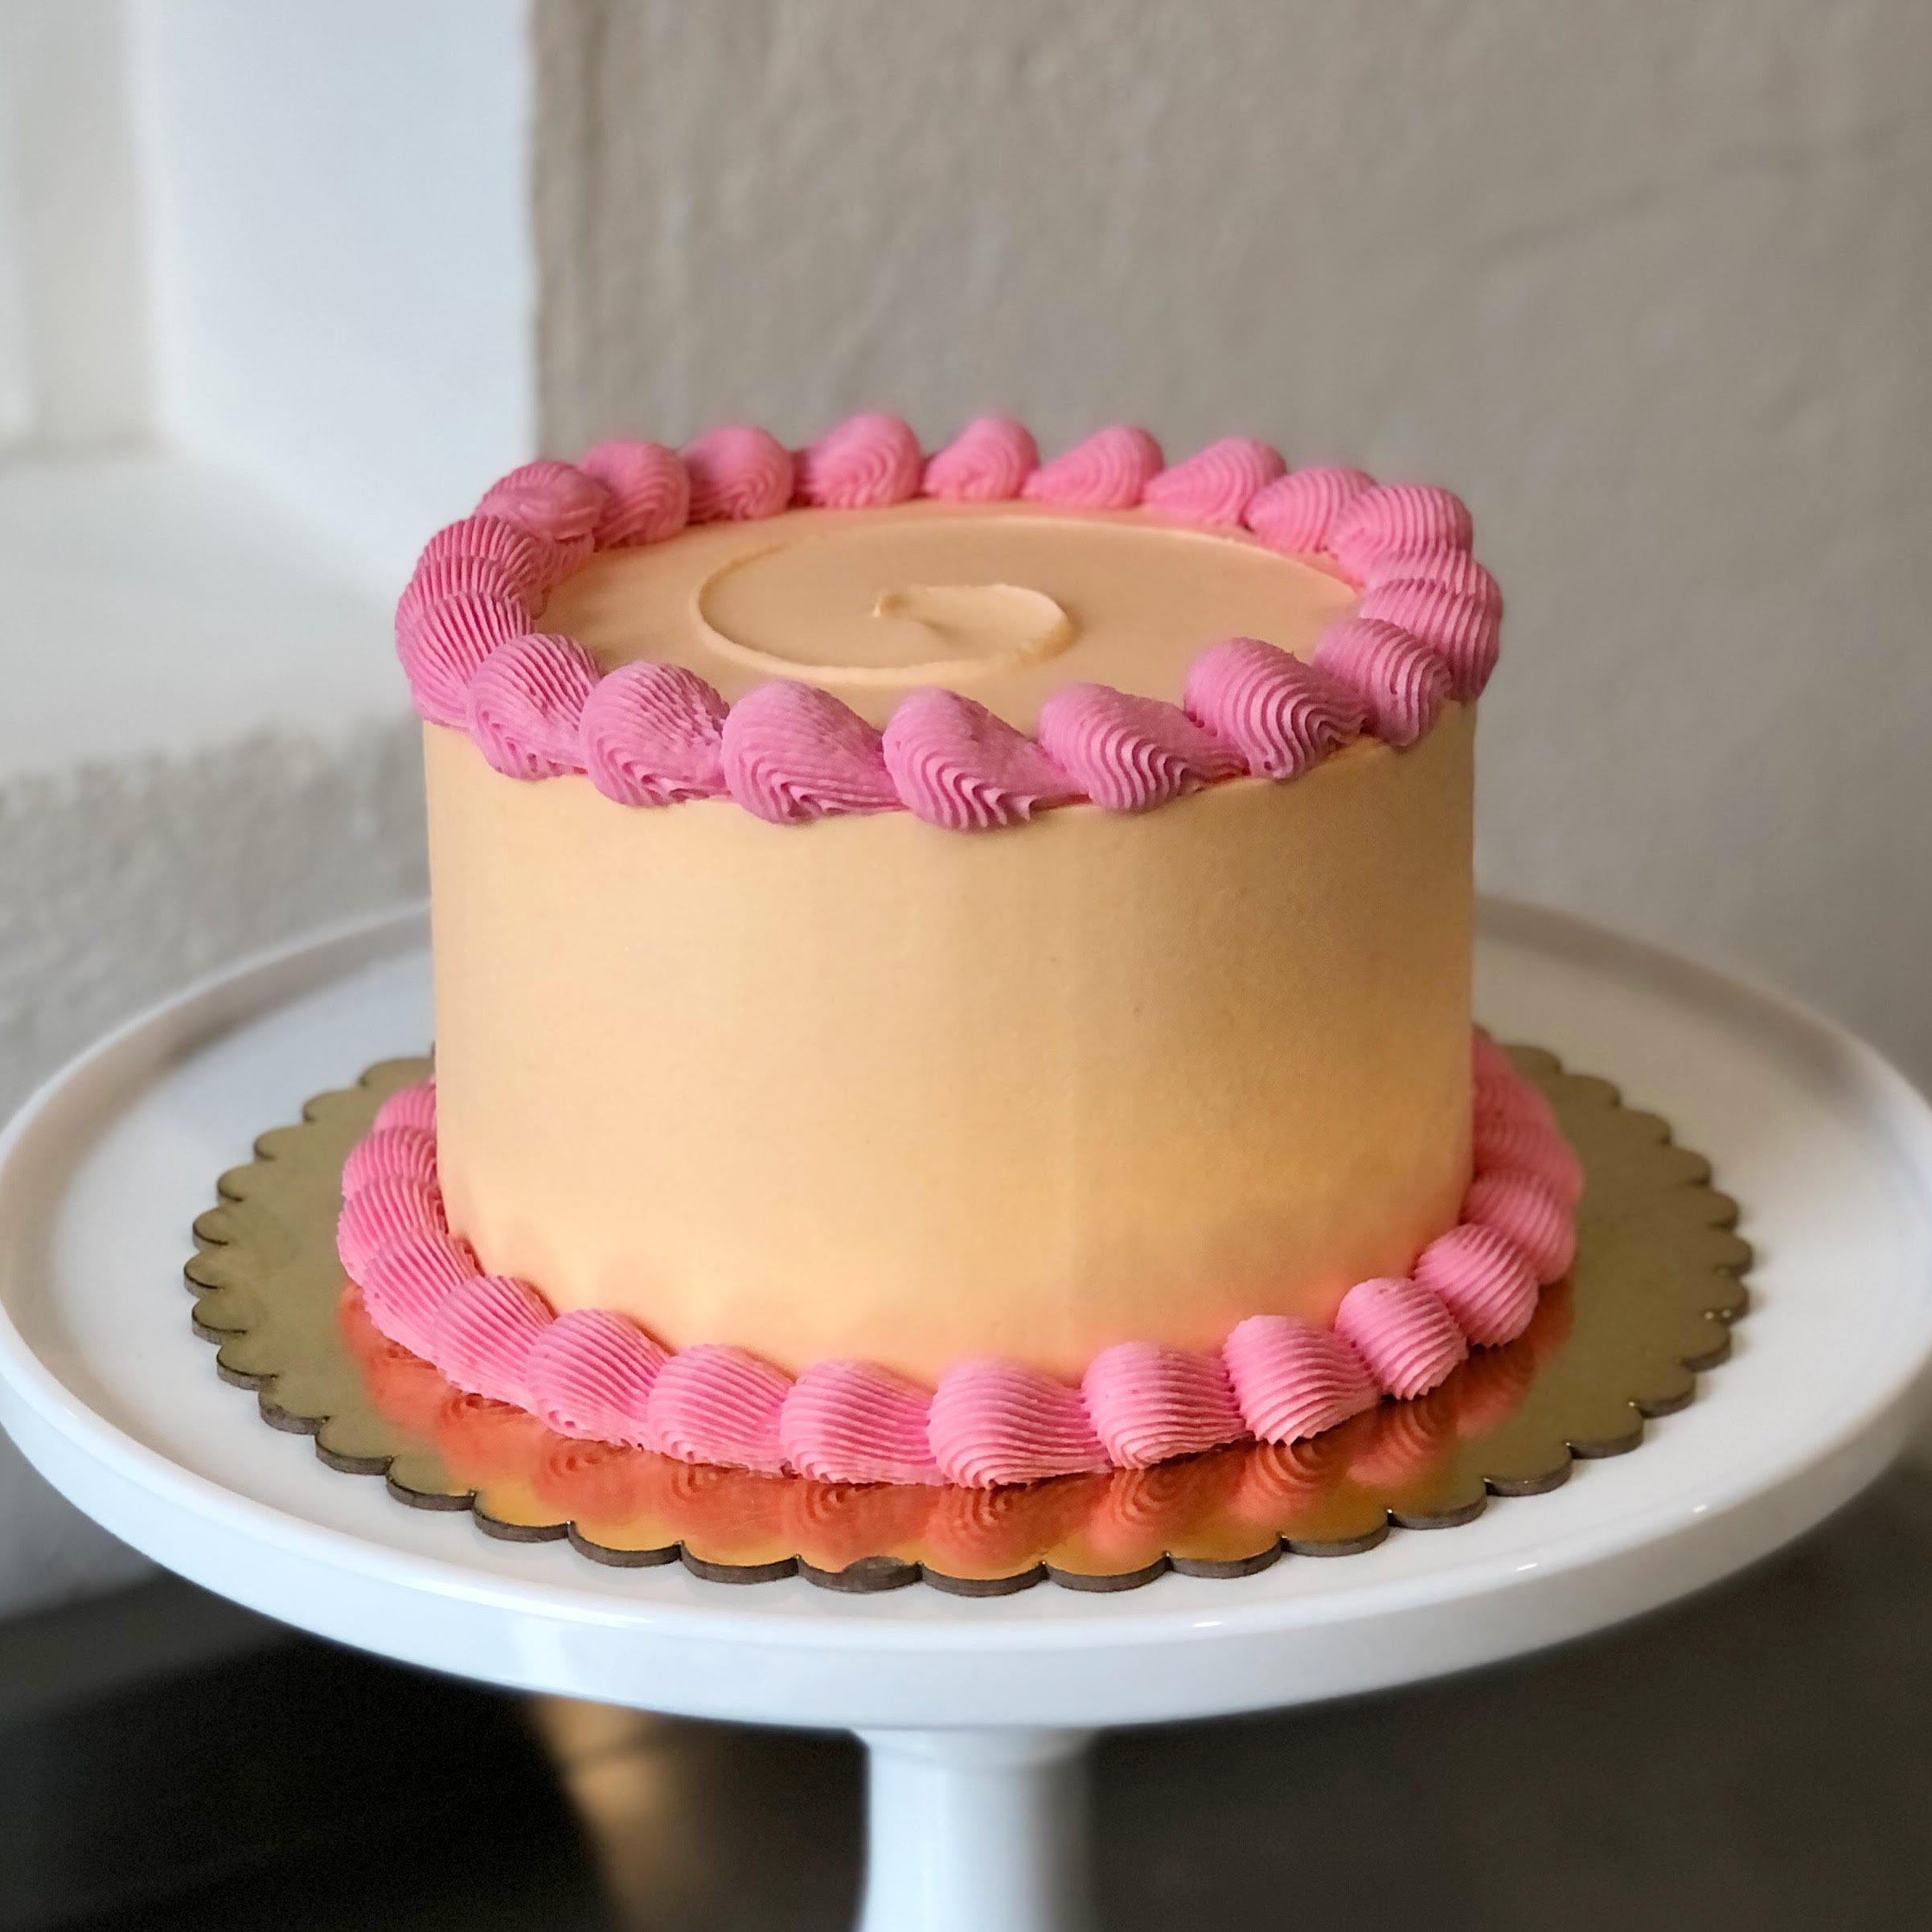 Cream-Colored Wedding Cake With Sugar Flowers